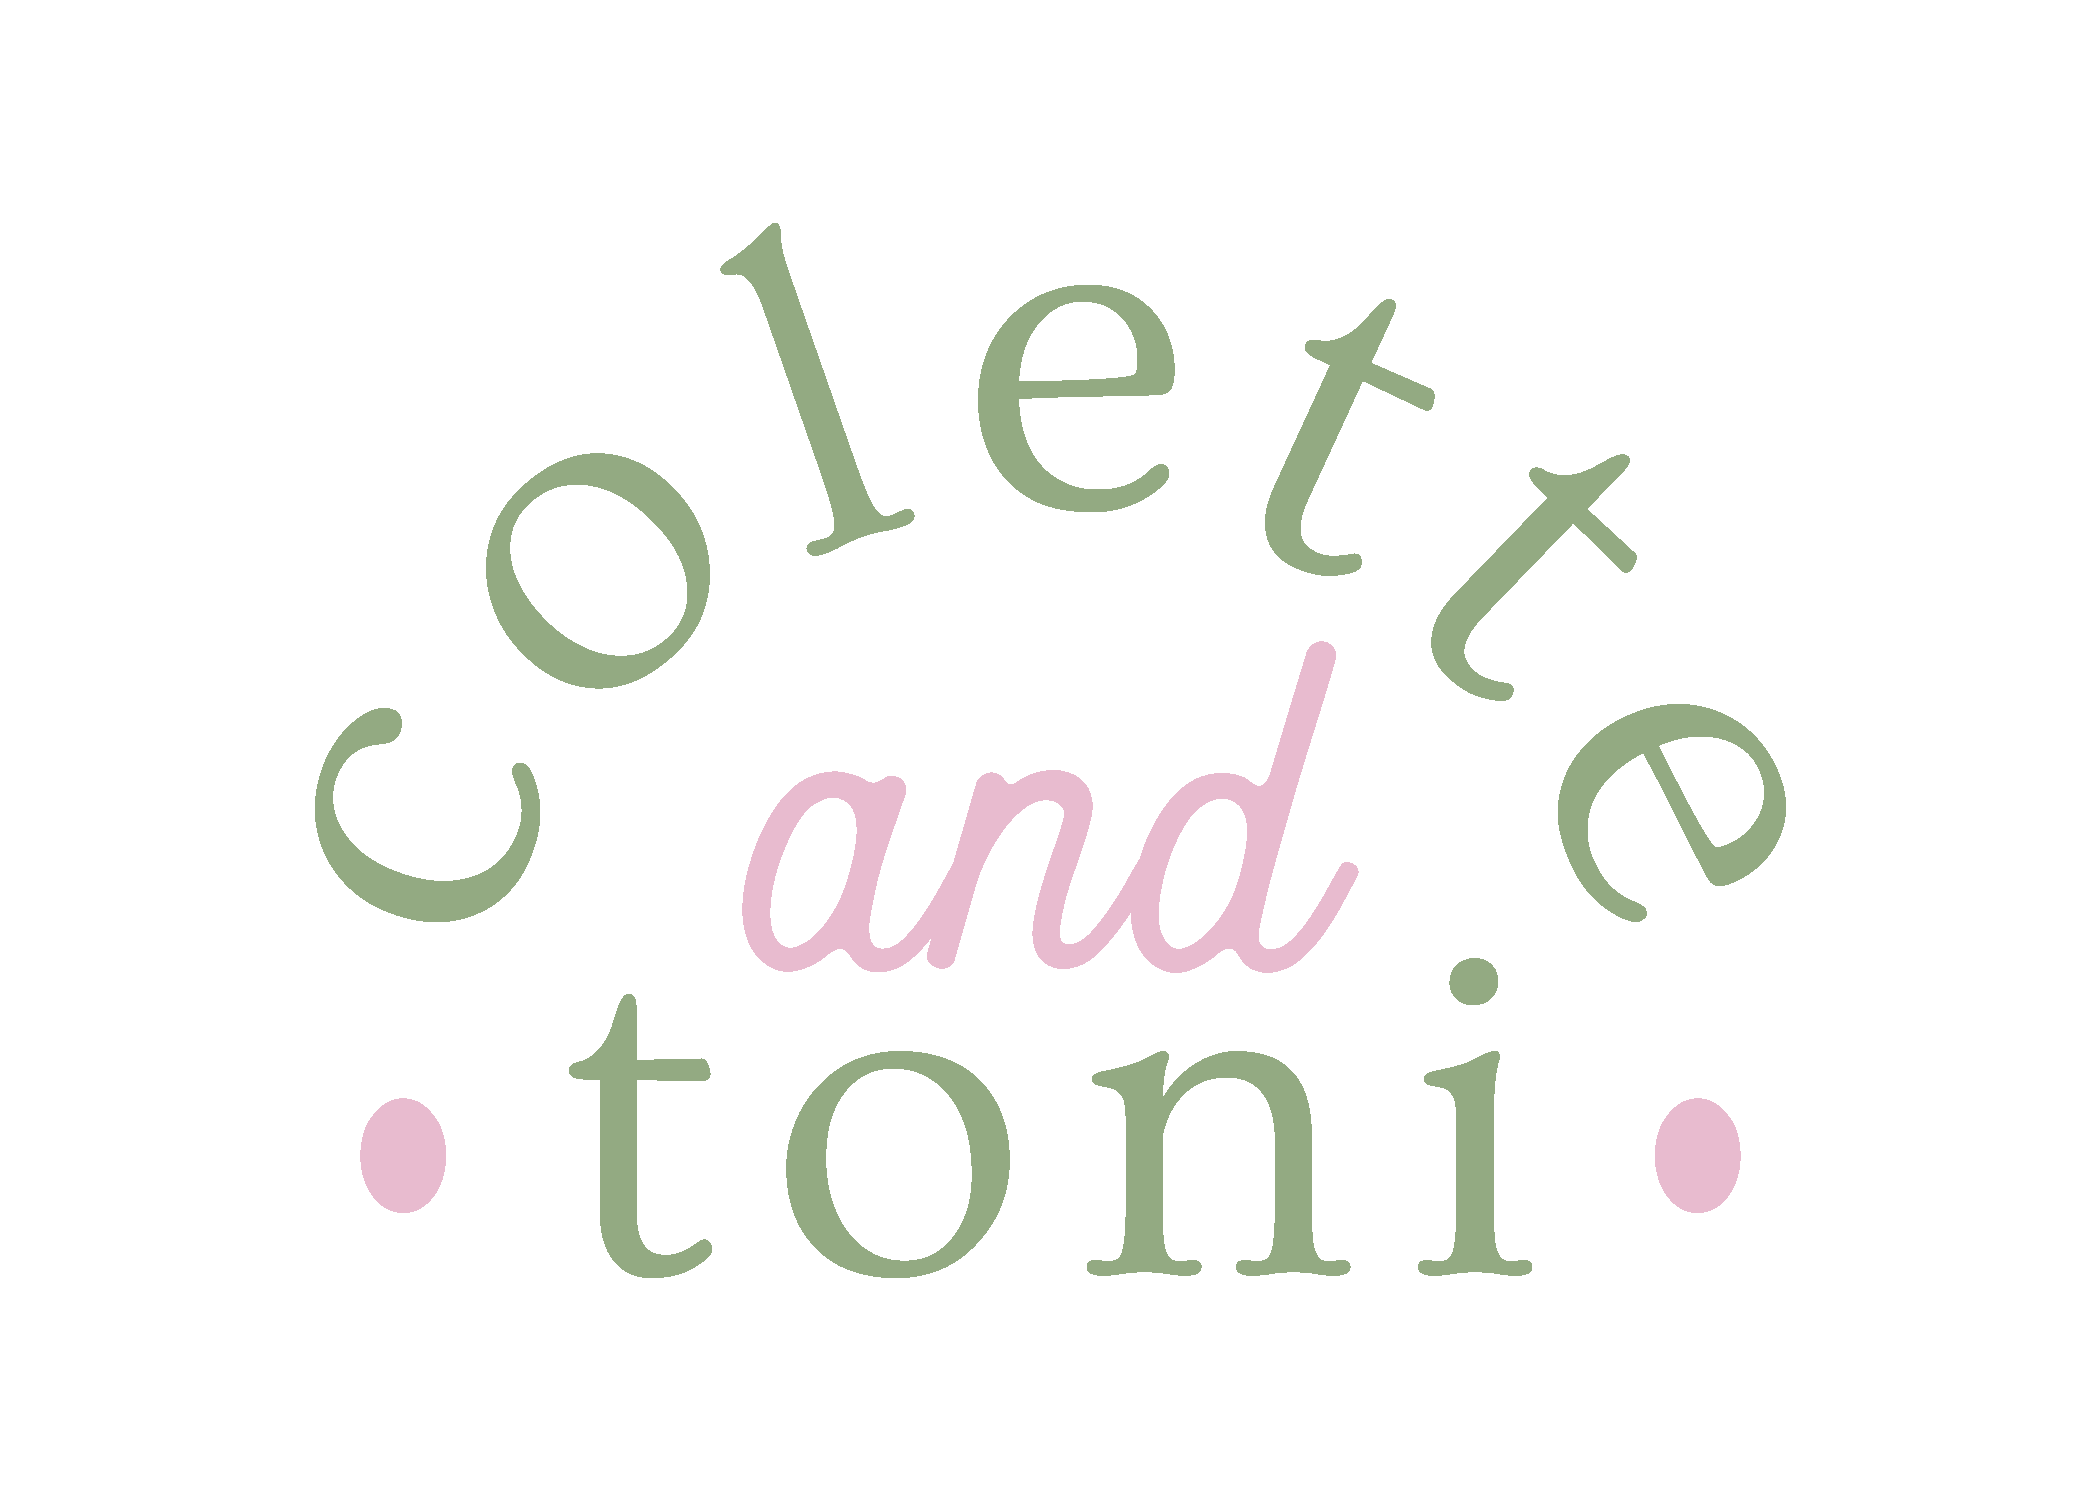 Colette & Toni